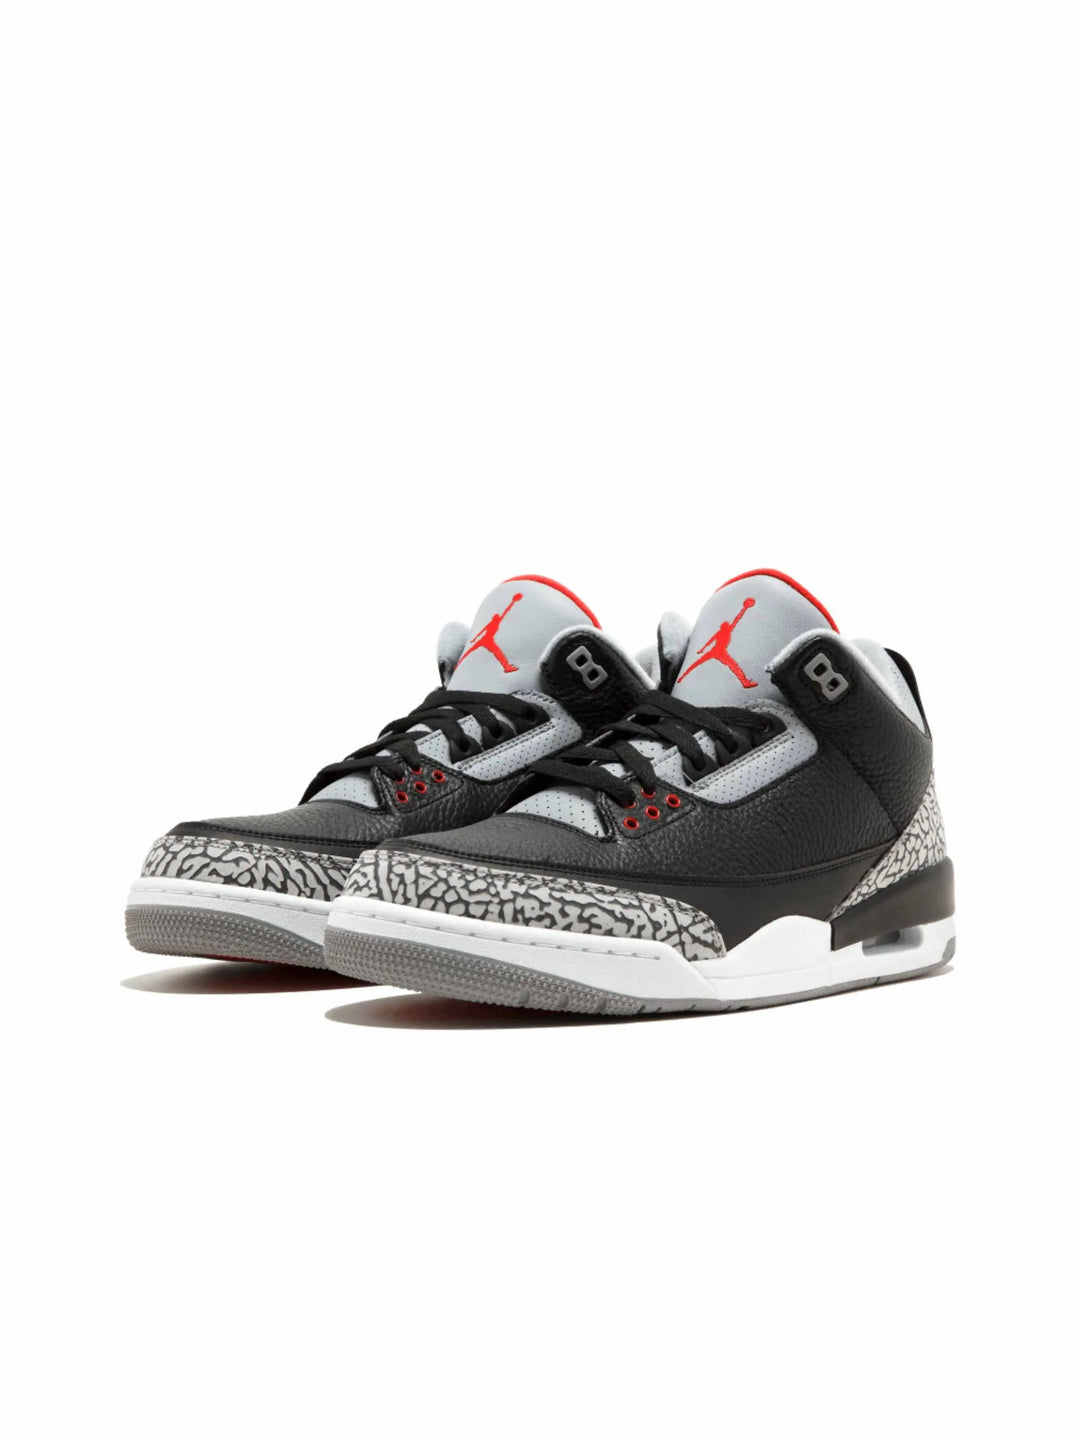 Nike Air Jordan 3 Retro Black Cement (2018) in Auckland, New Zealand - Shop name